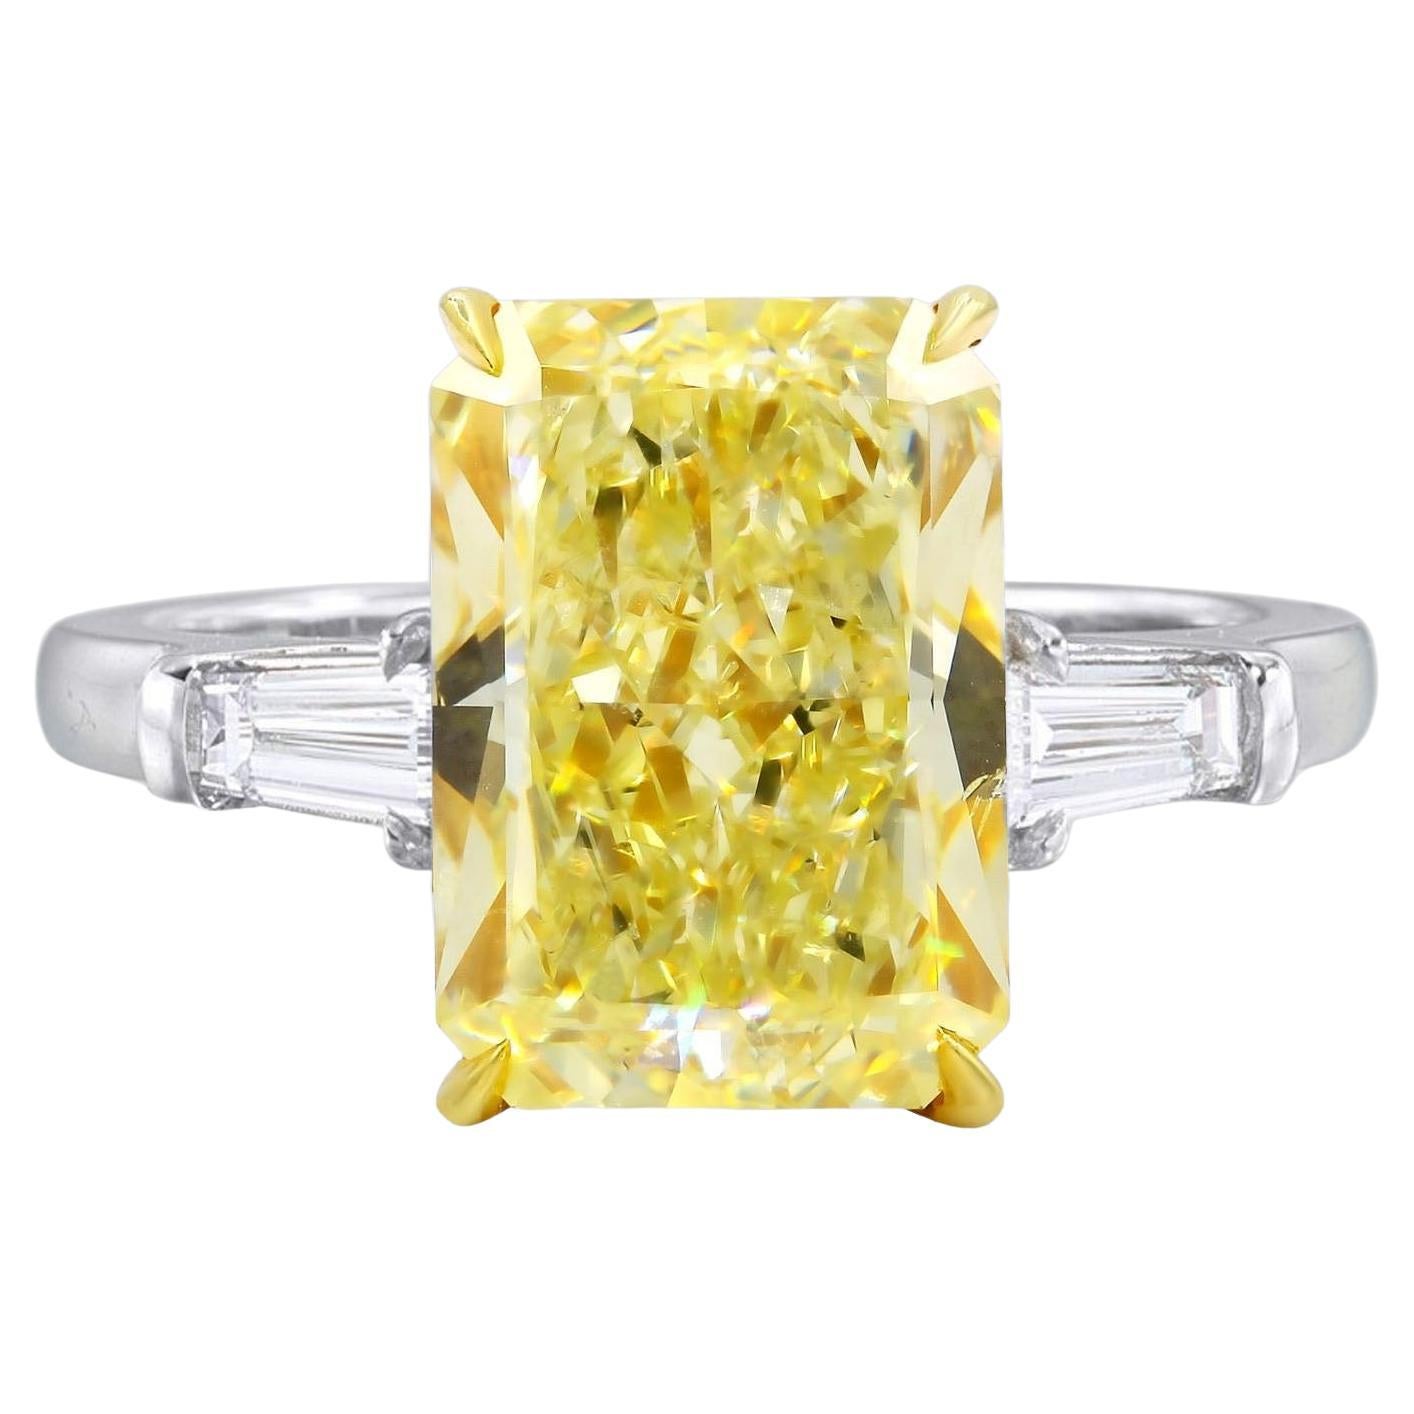 GIA Certified 5 Carat Fancy Yellow Diamond Internally Flawless Clarity Ring